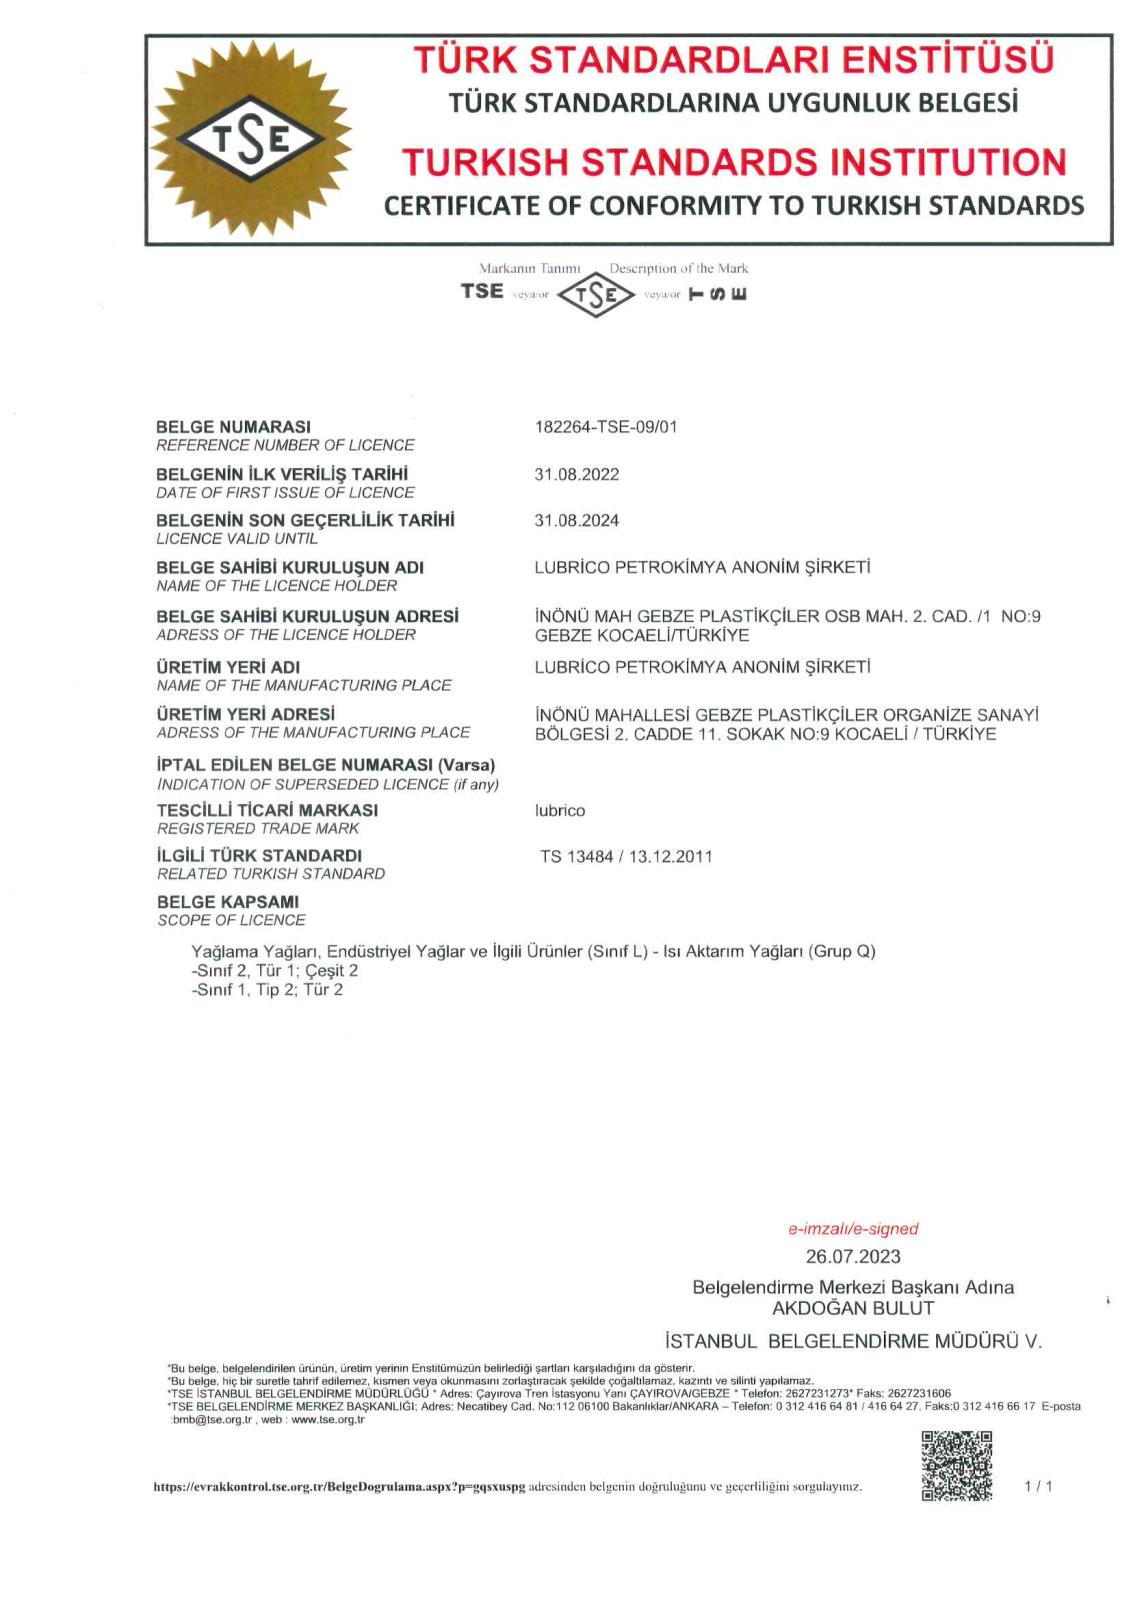 TSE Certificate of Conformity 13484